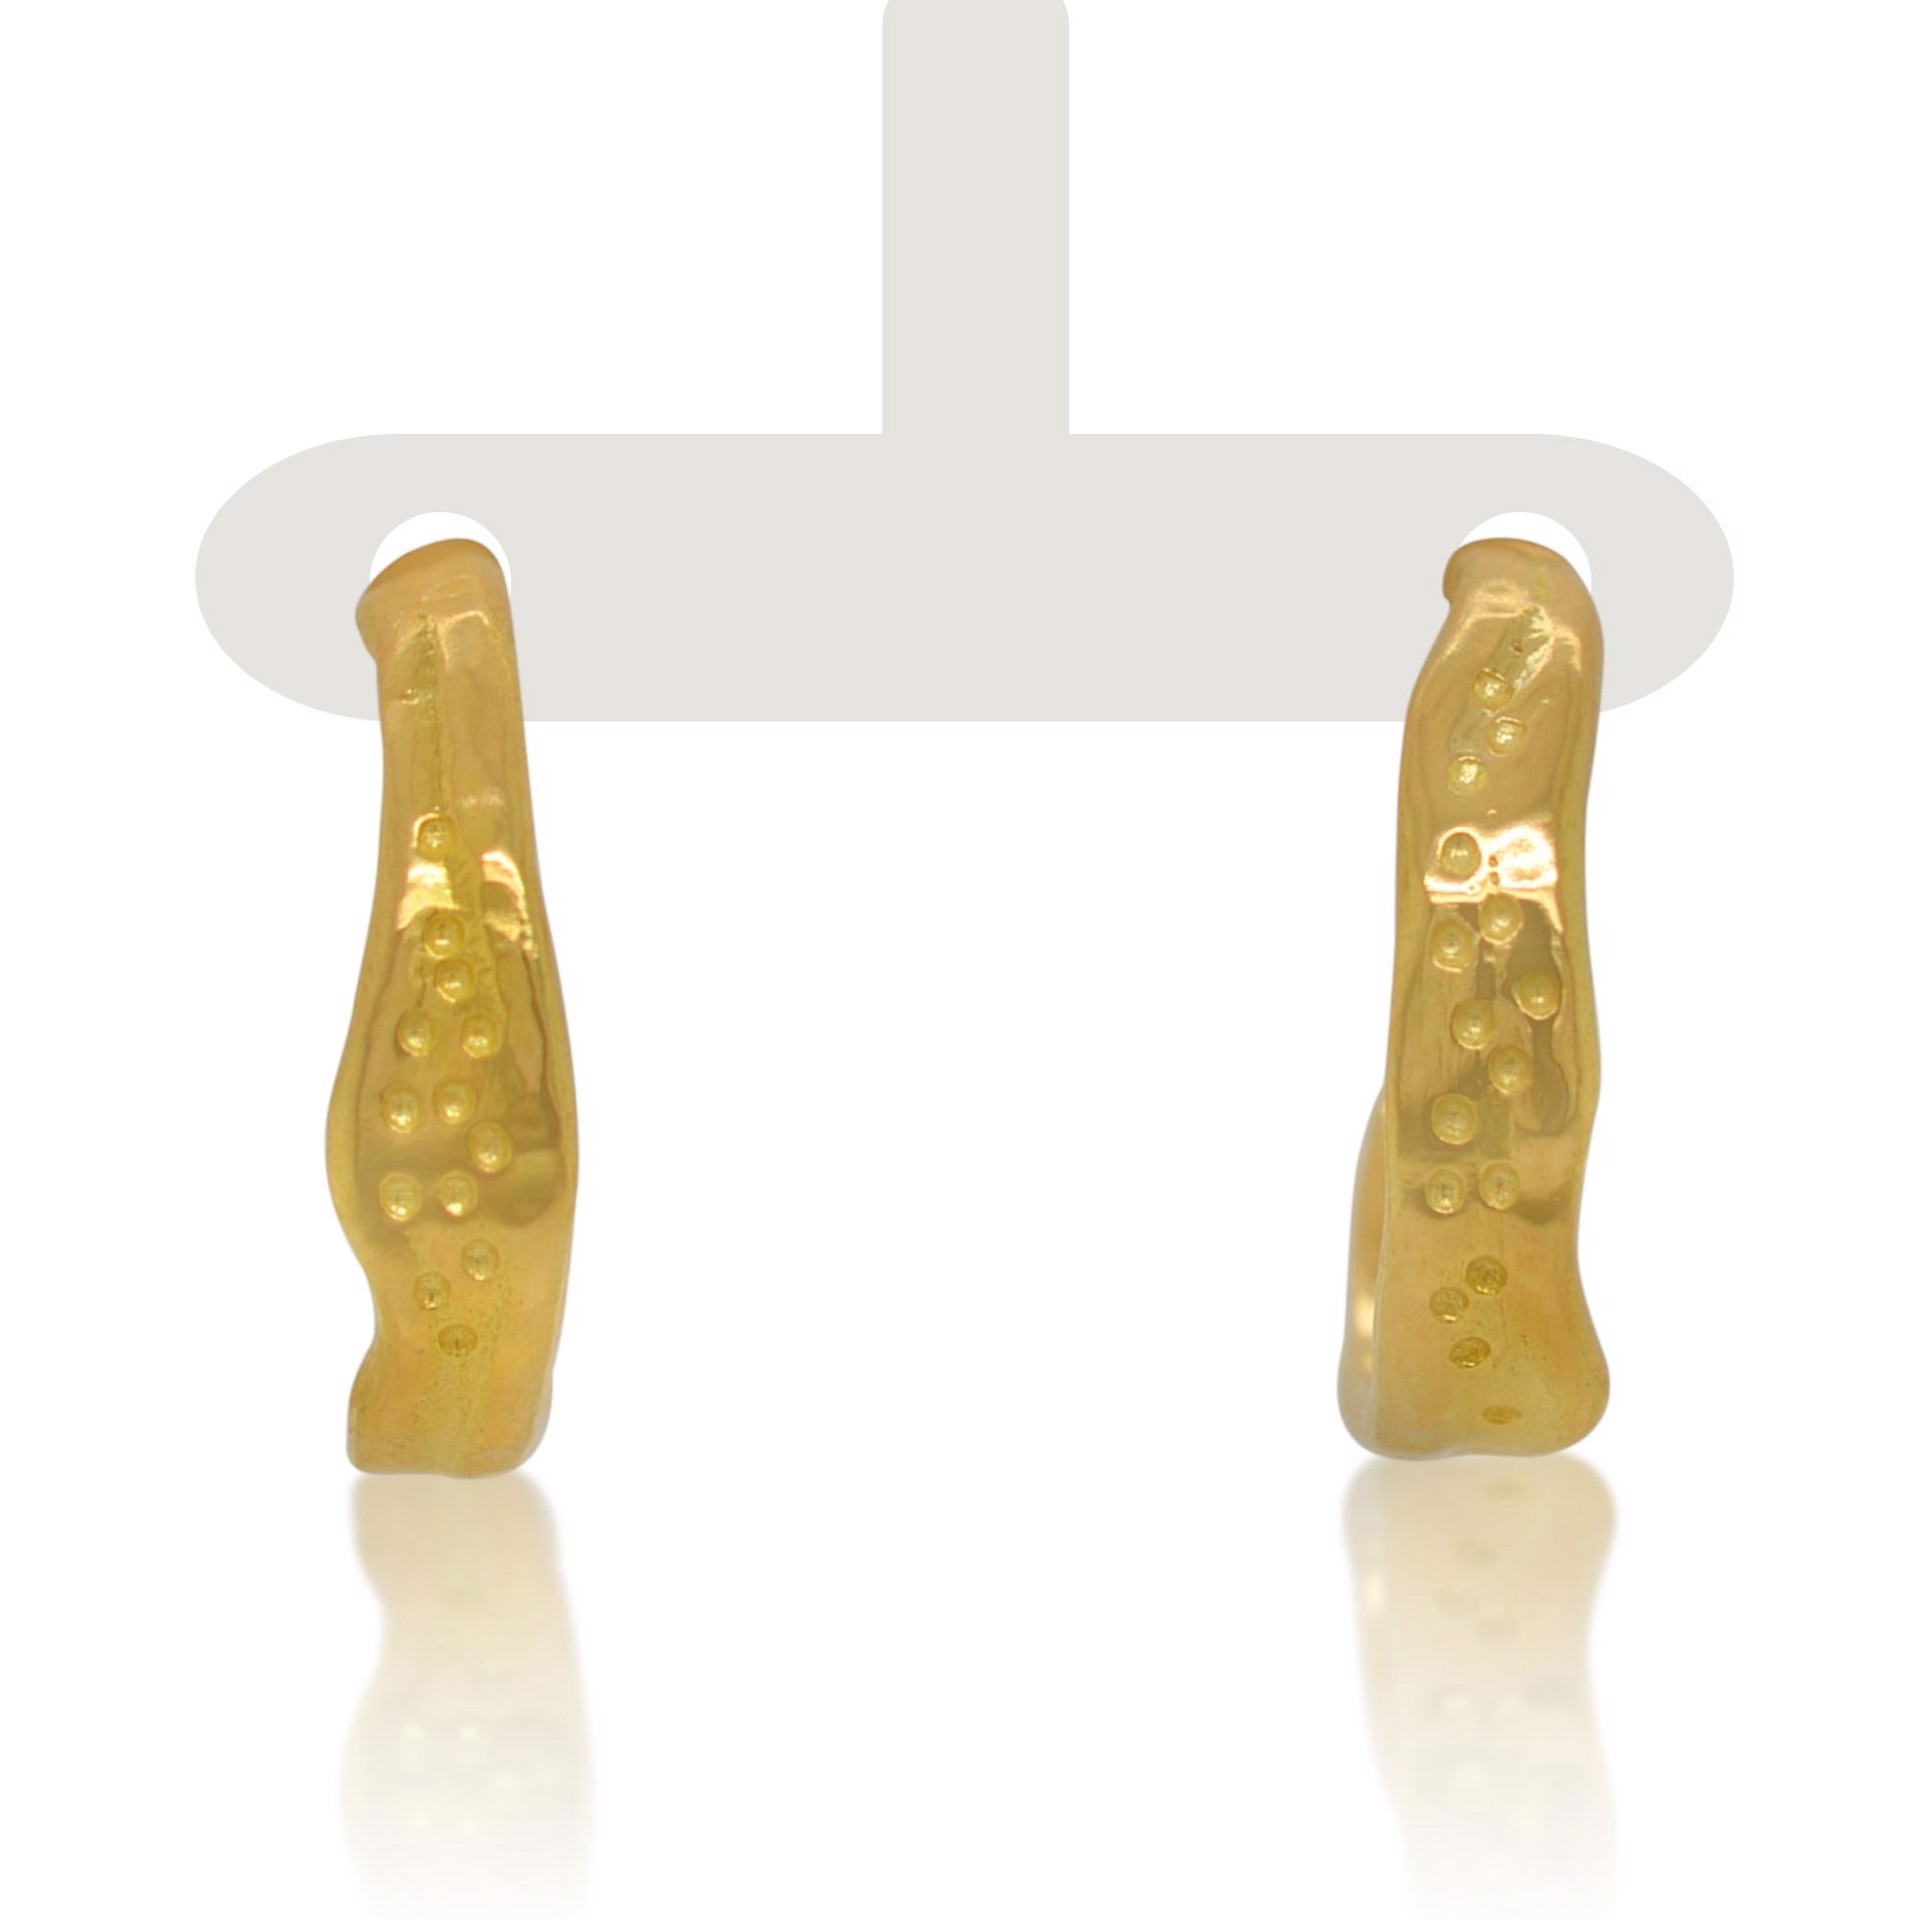 Spiraling Wave Earrings 18K Gold by Kristen Baird